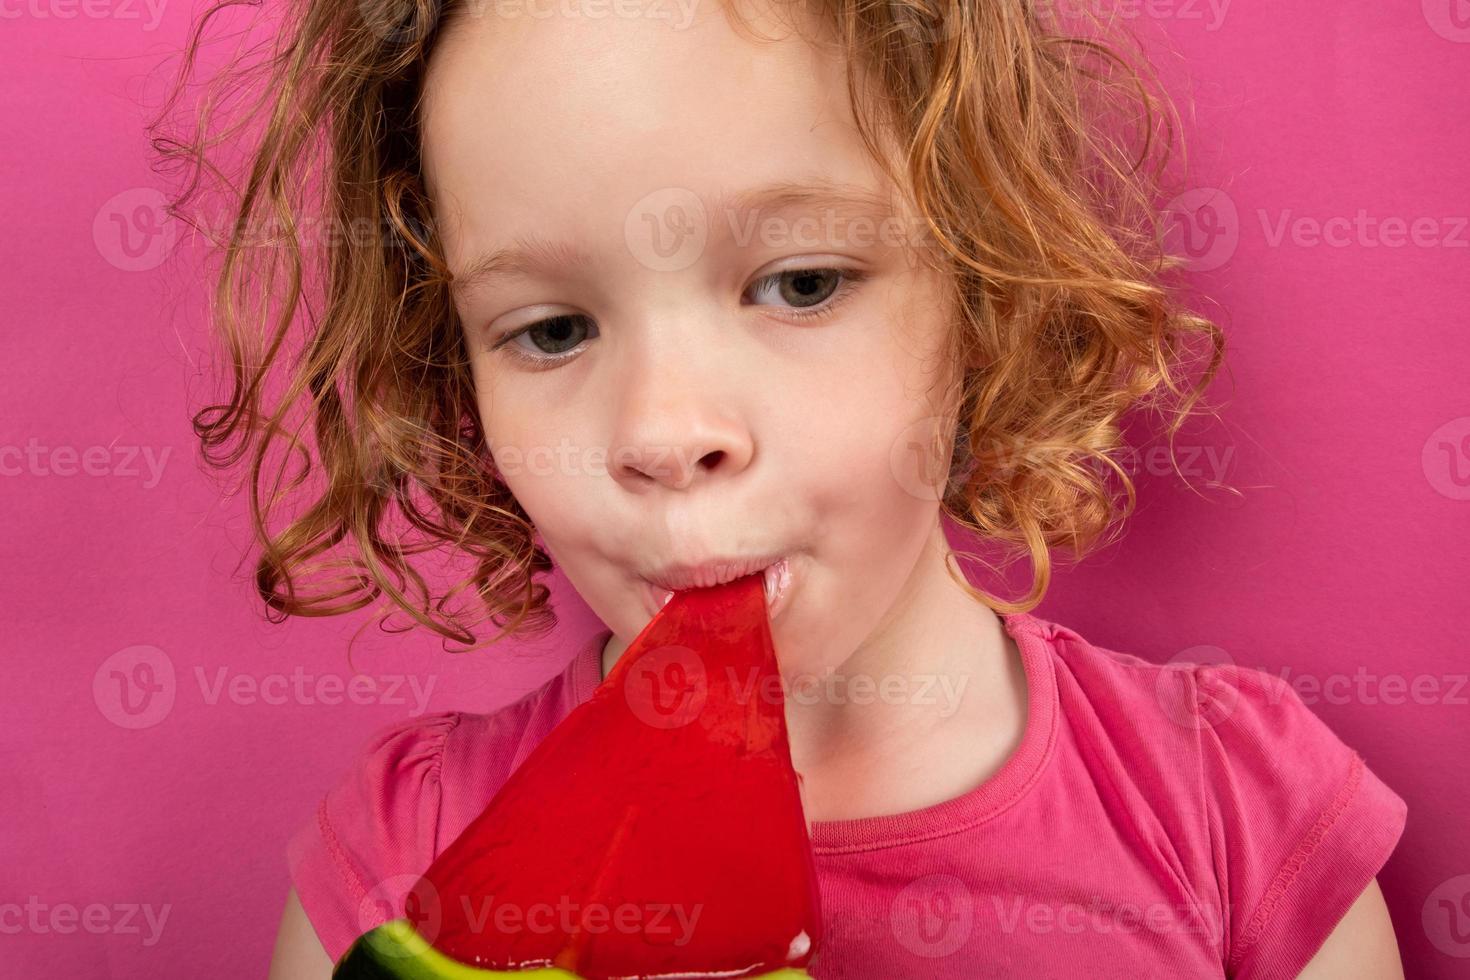 bambina che mangia caramelle all'anguria, i bambini adorano i dolci foto